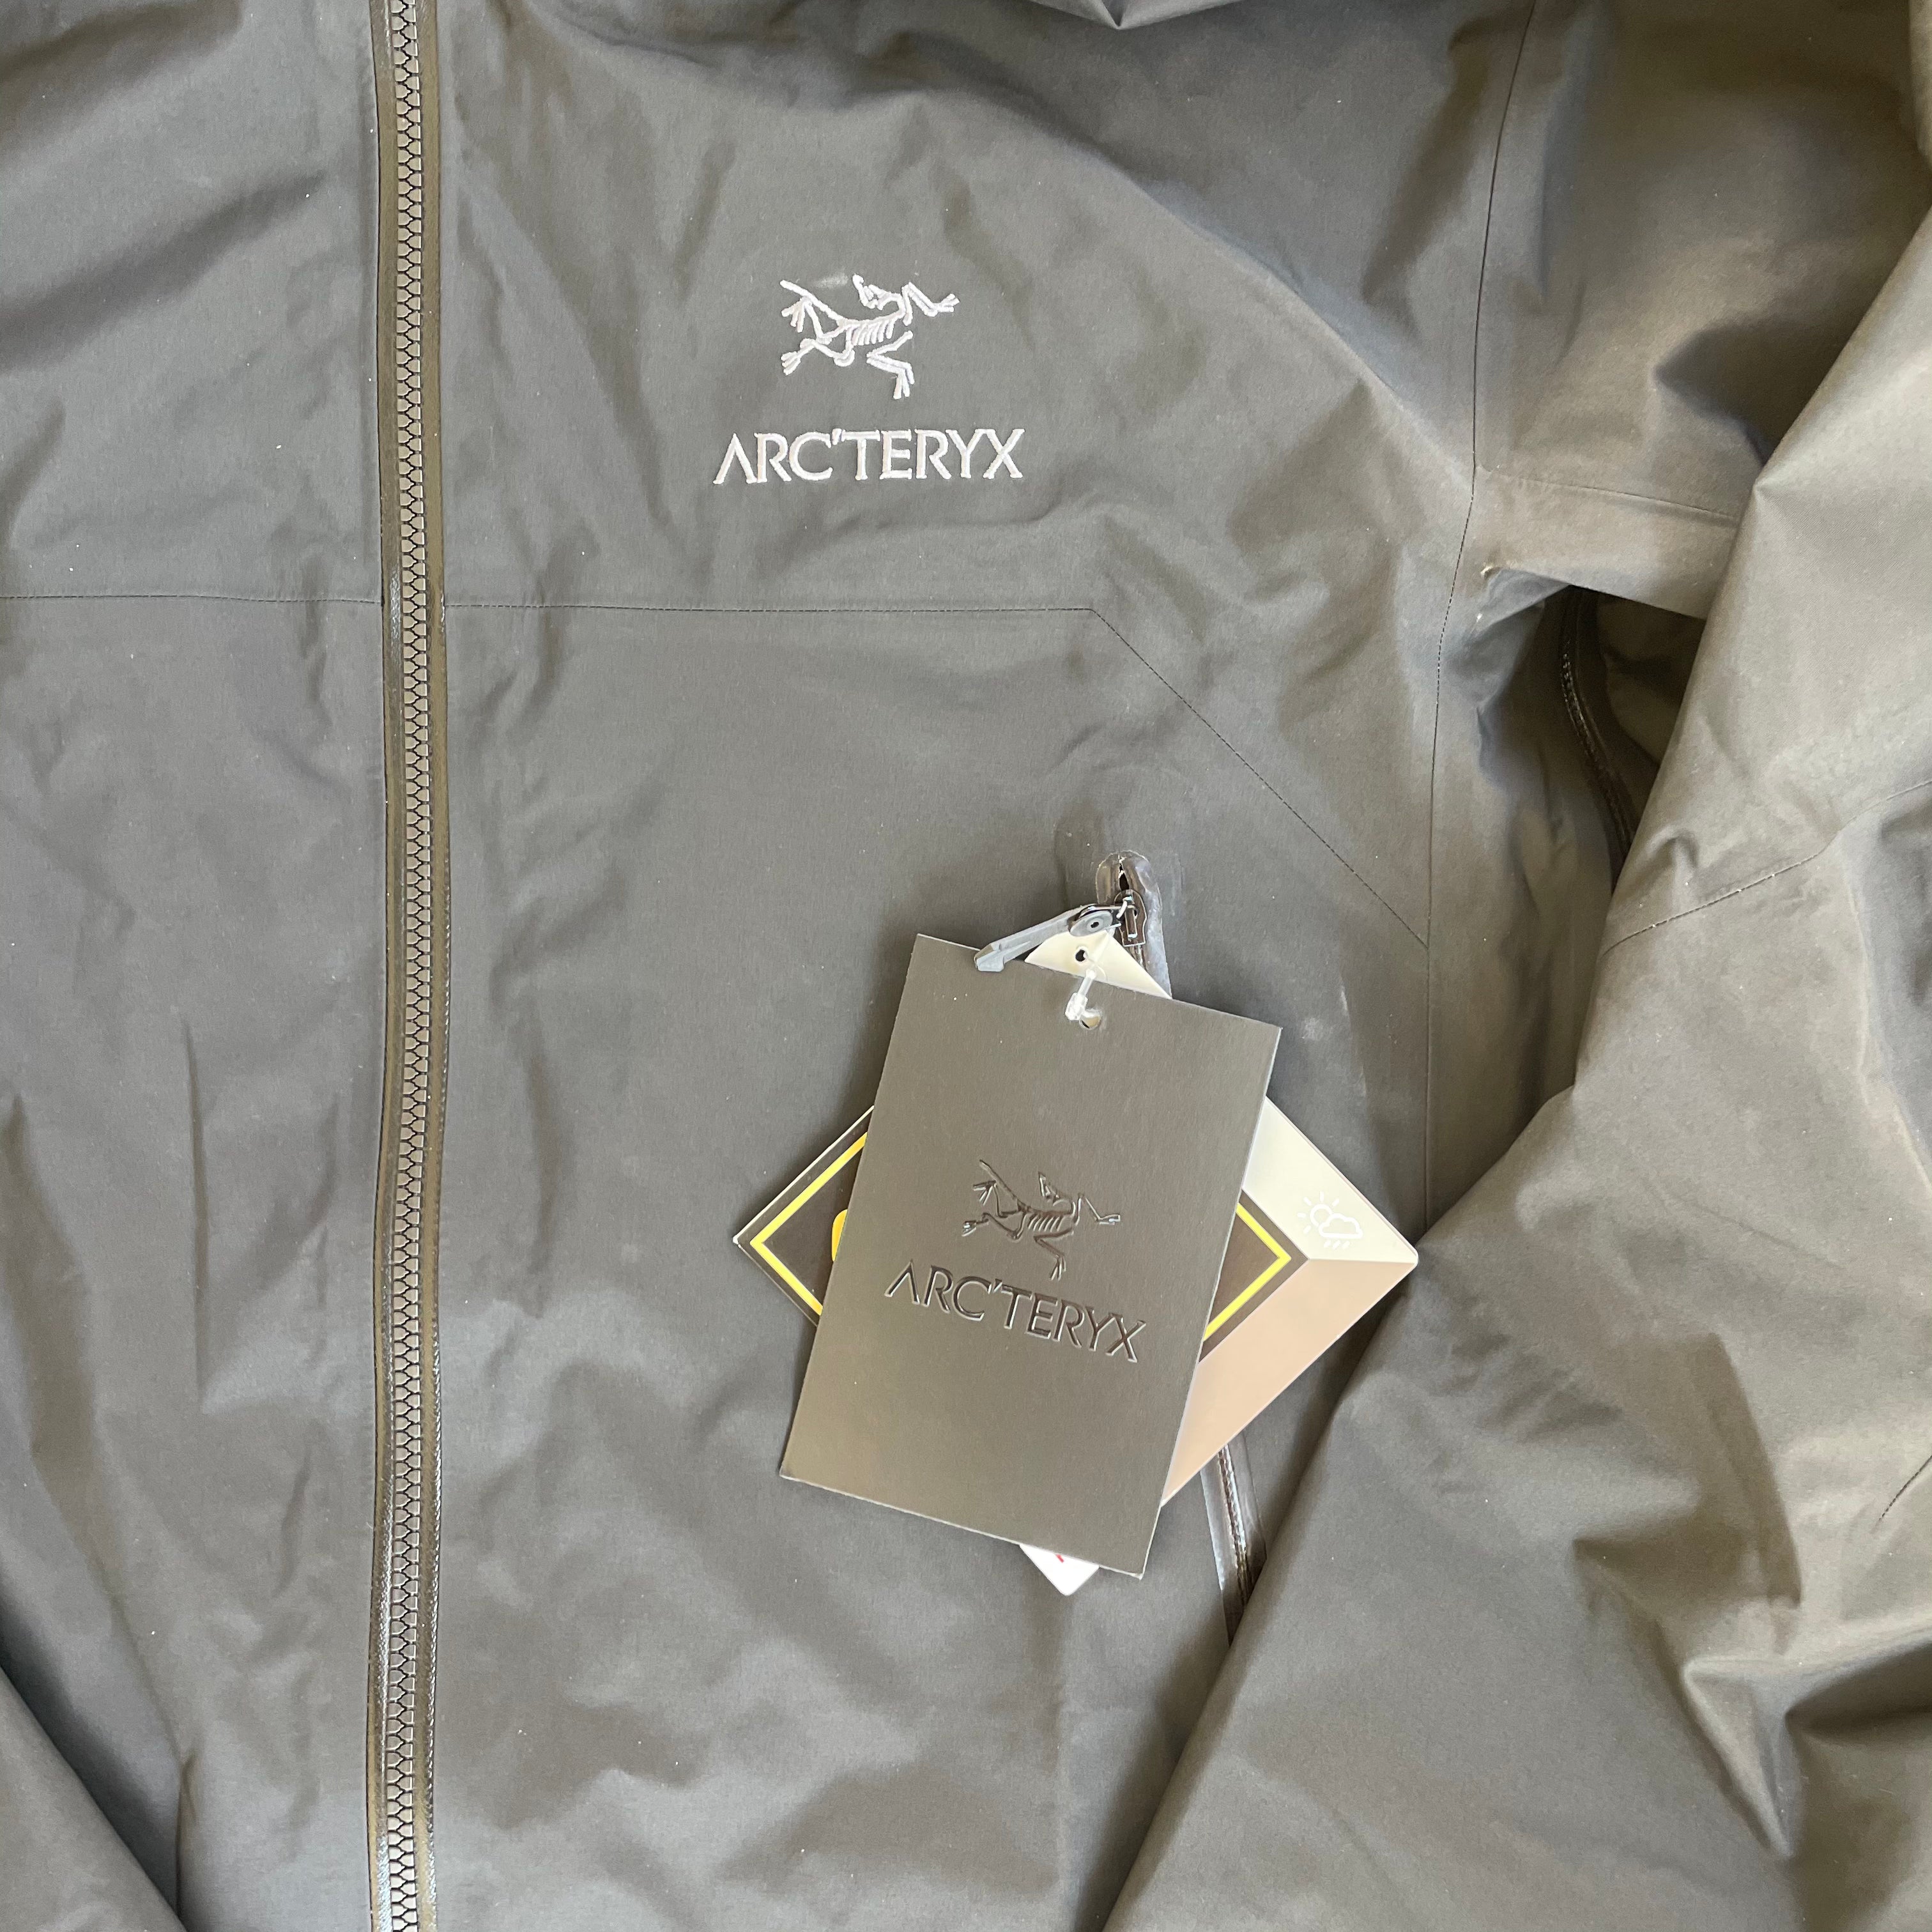 Arcteryx Beta AR Jacket Large (Brand new with tags)